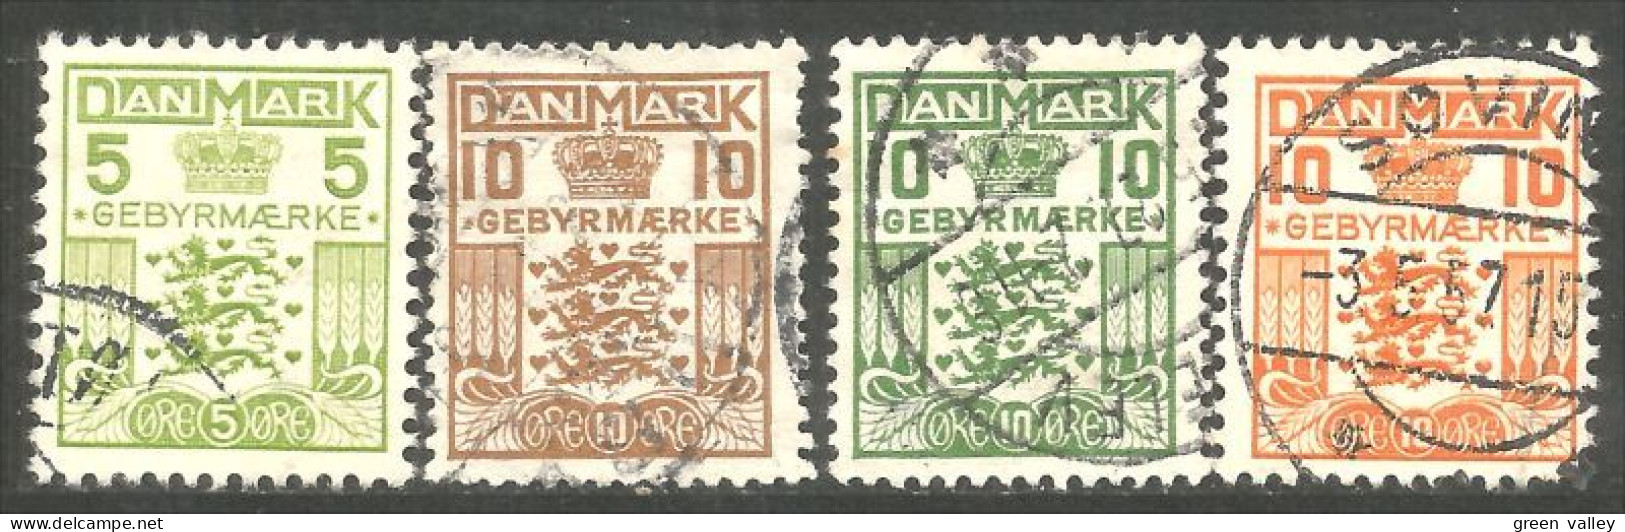 300 Denmark 1926-34 Gebyr (DMK-95) - Officials